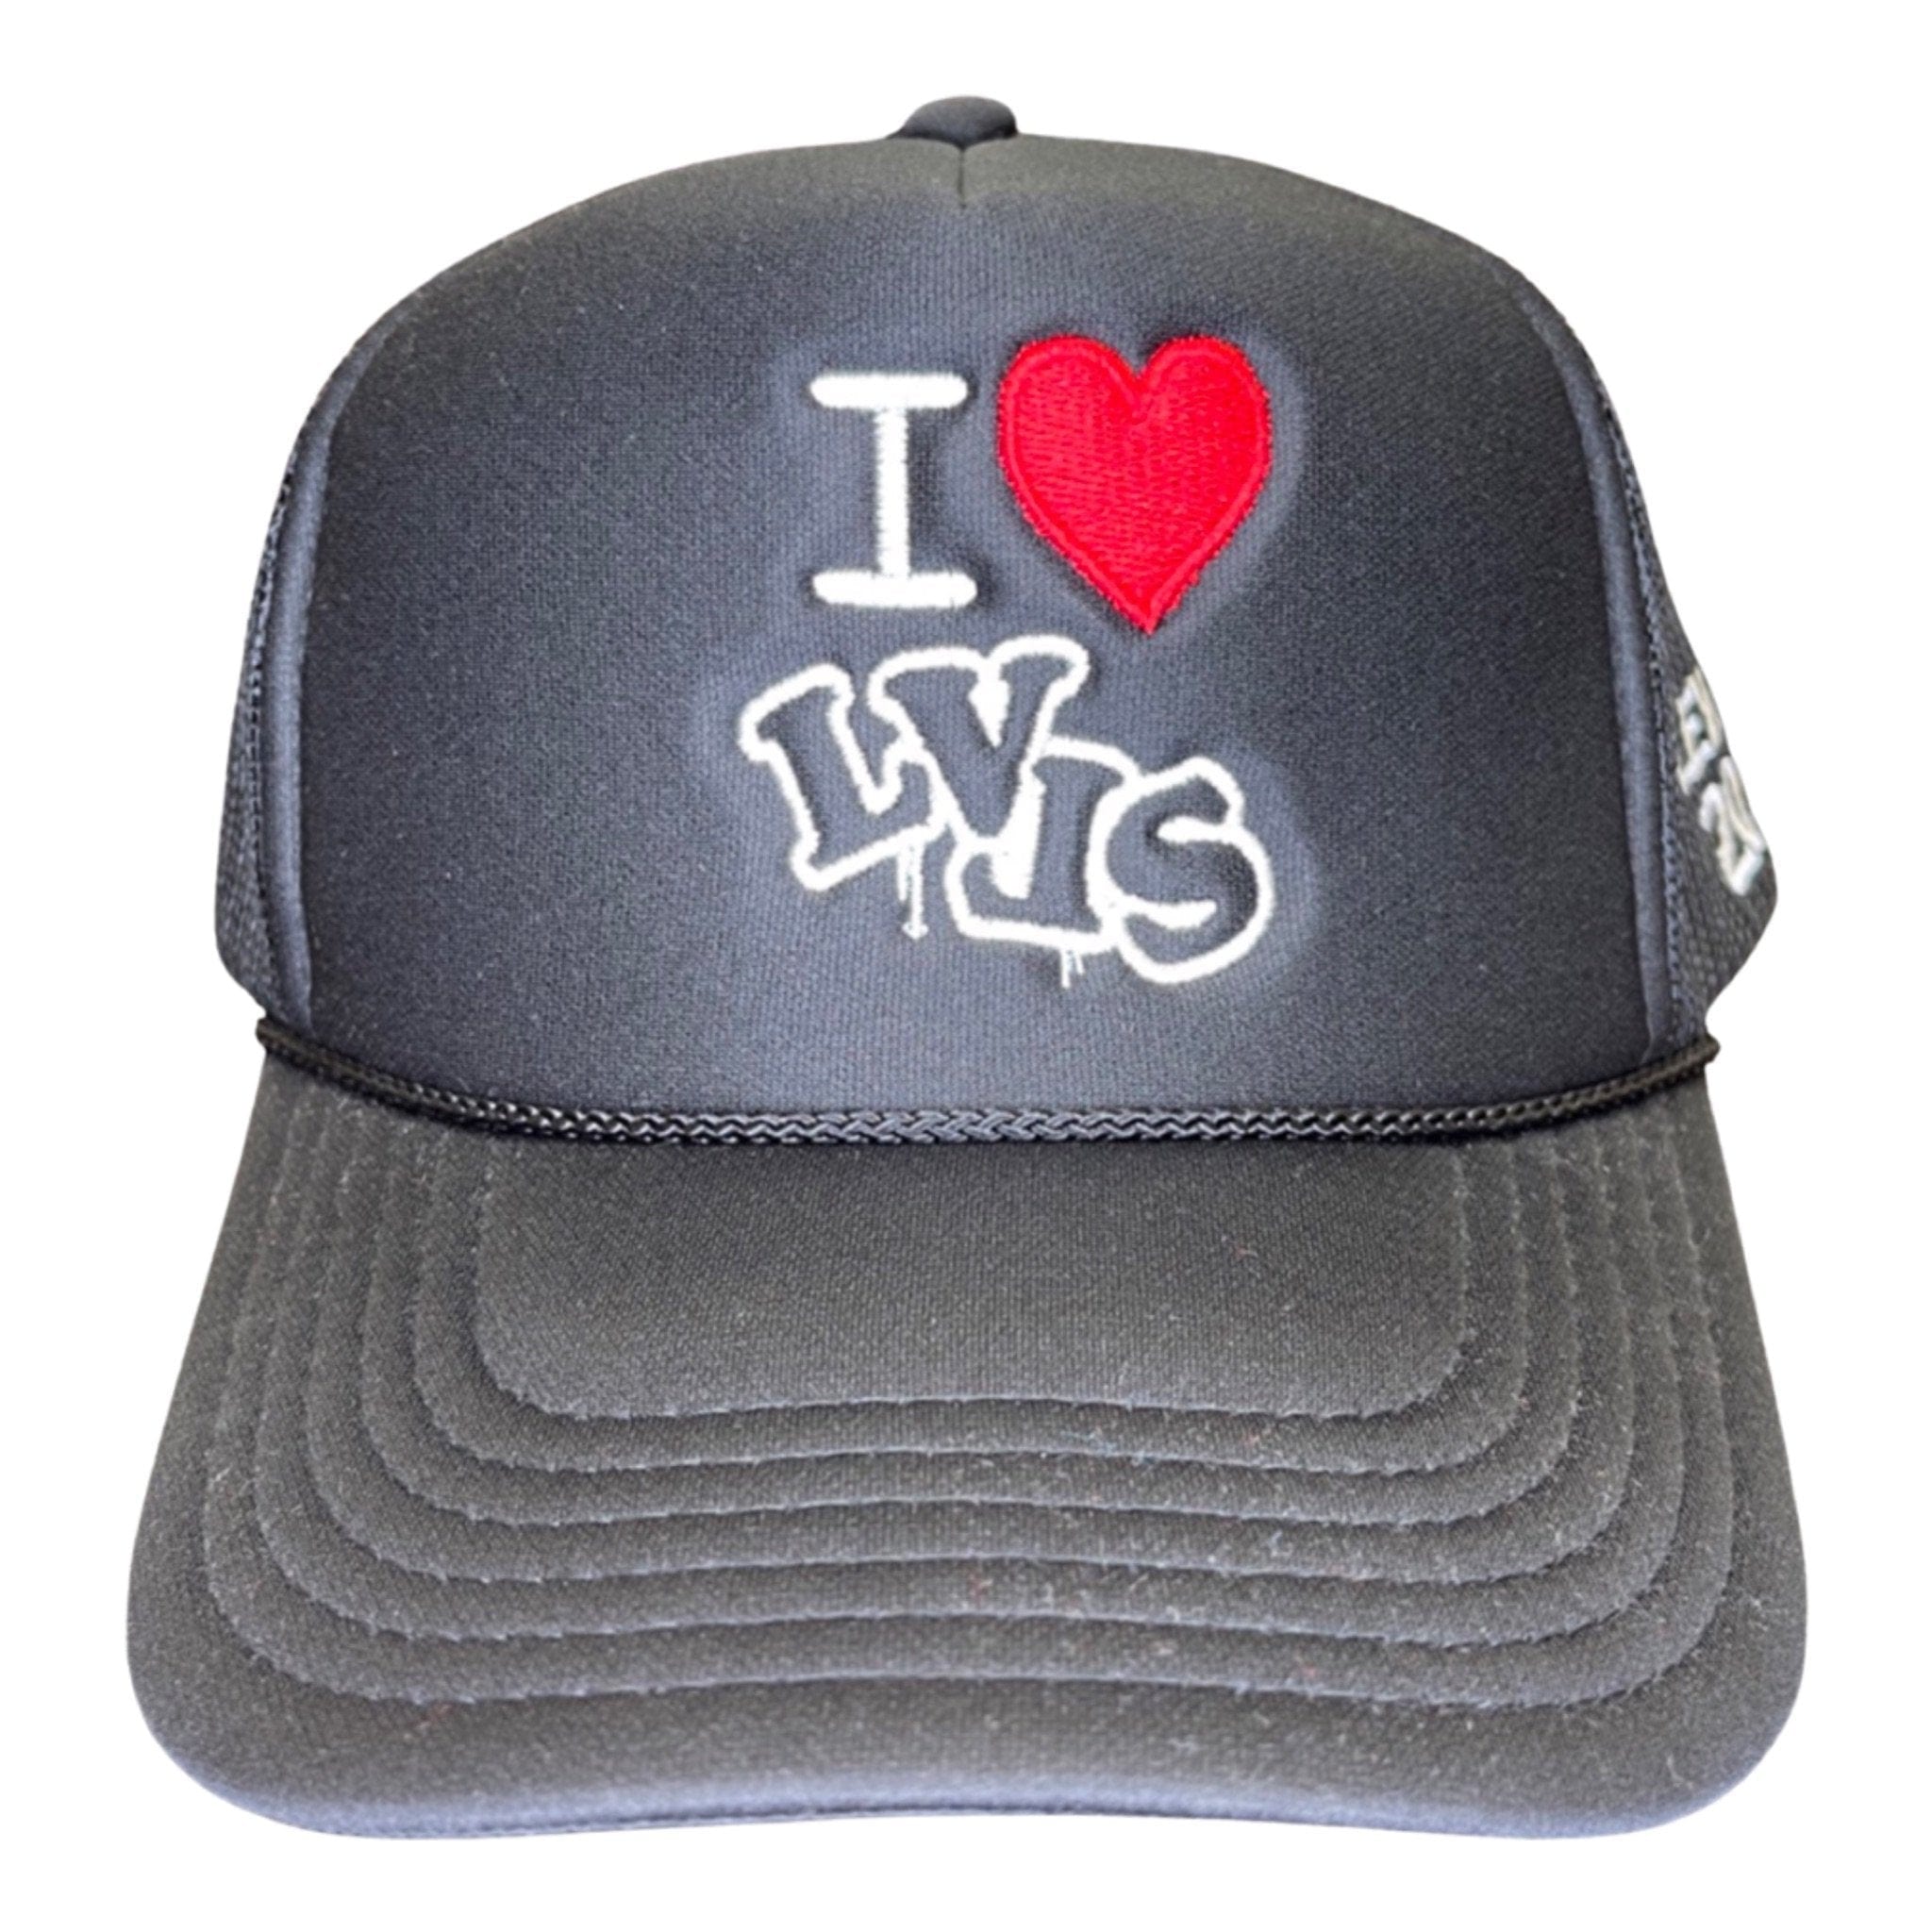 LVLS House of Hoodies, LLC Hats Trucker LVLS Trucker Hat (Black)